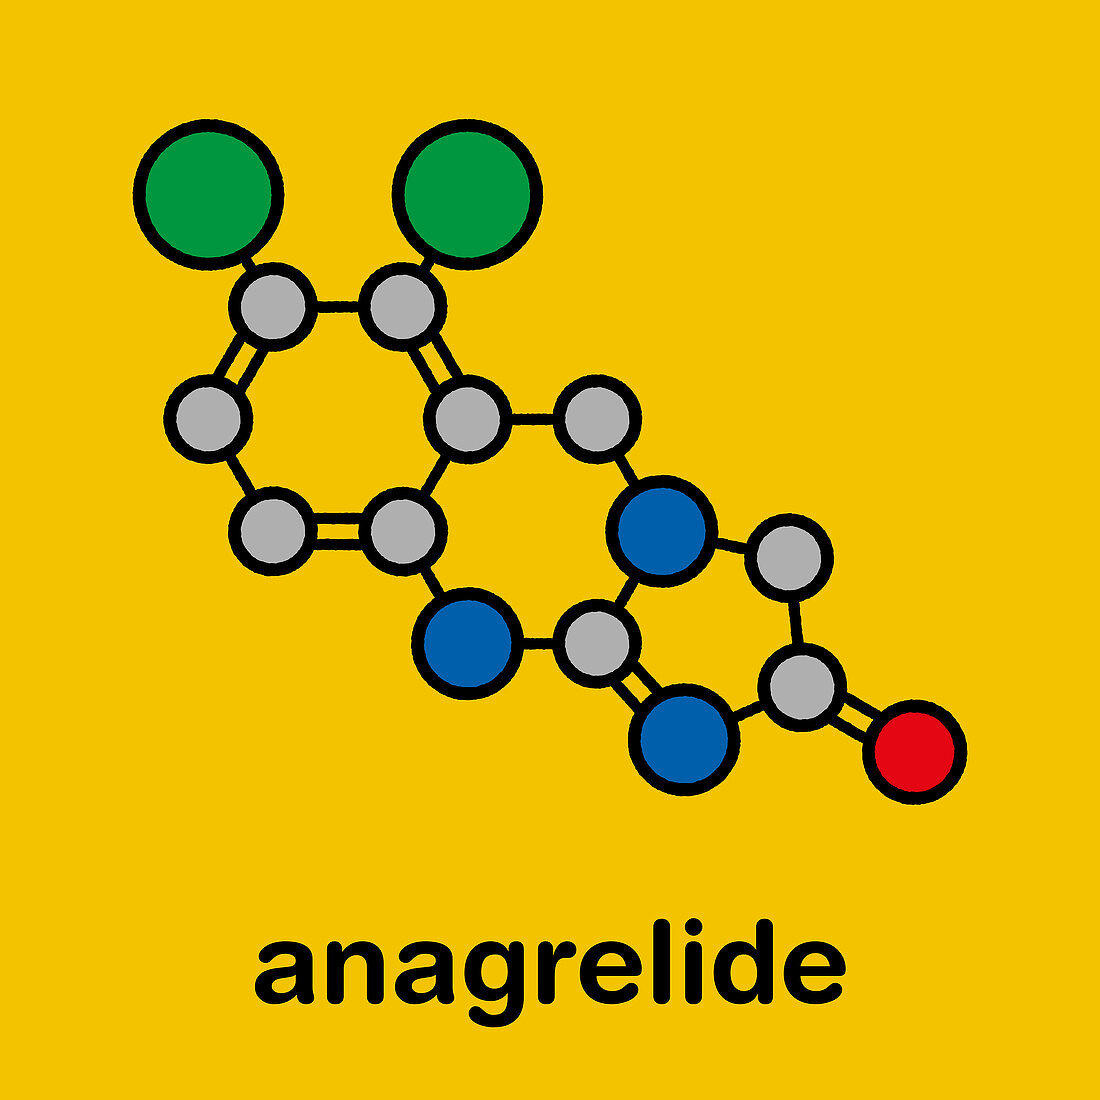 Anagrelide essential thrombocytosis drug molecule